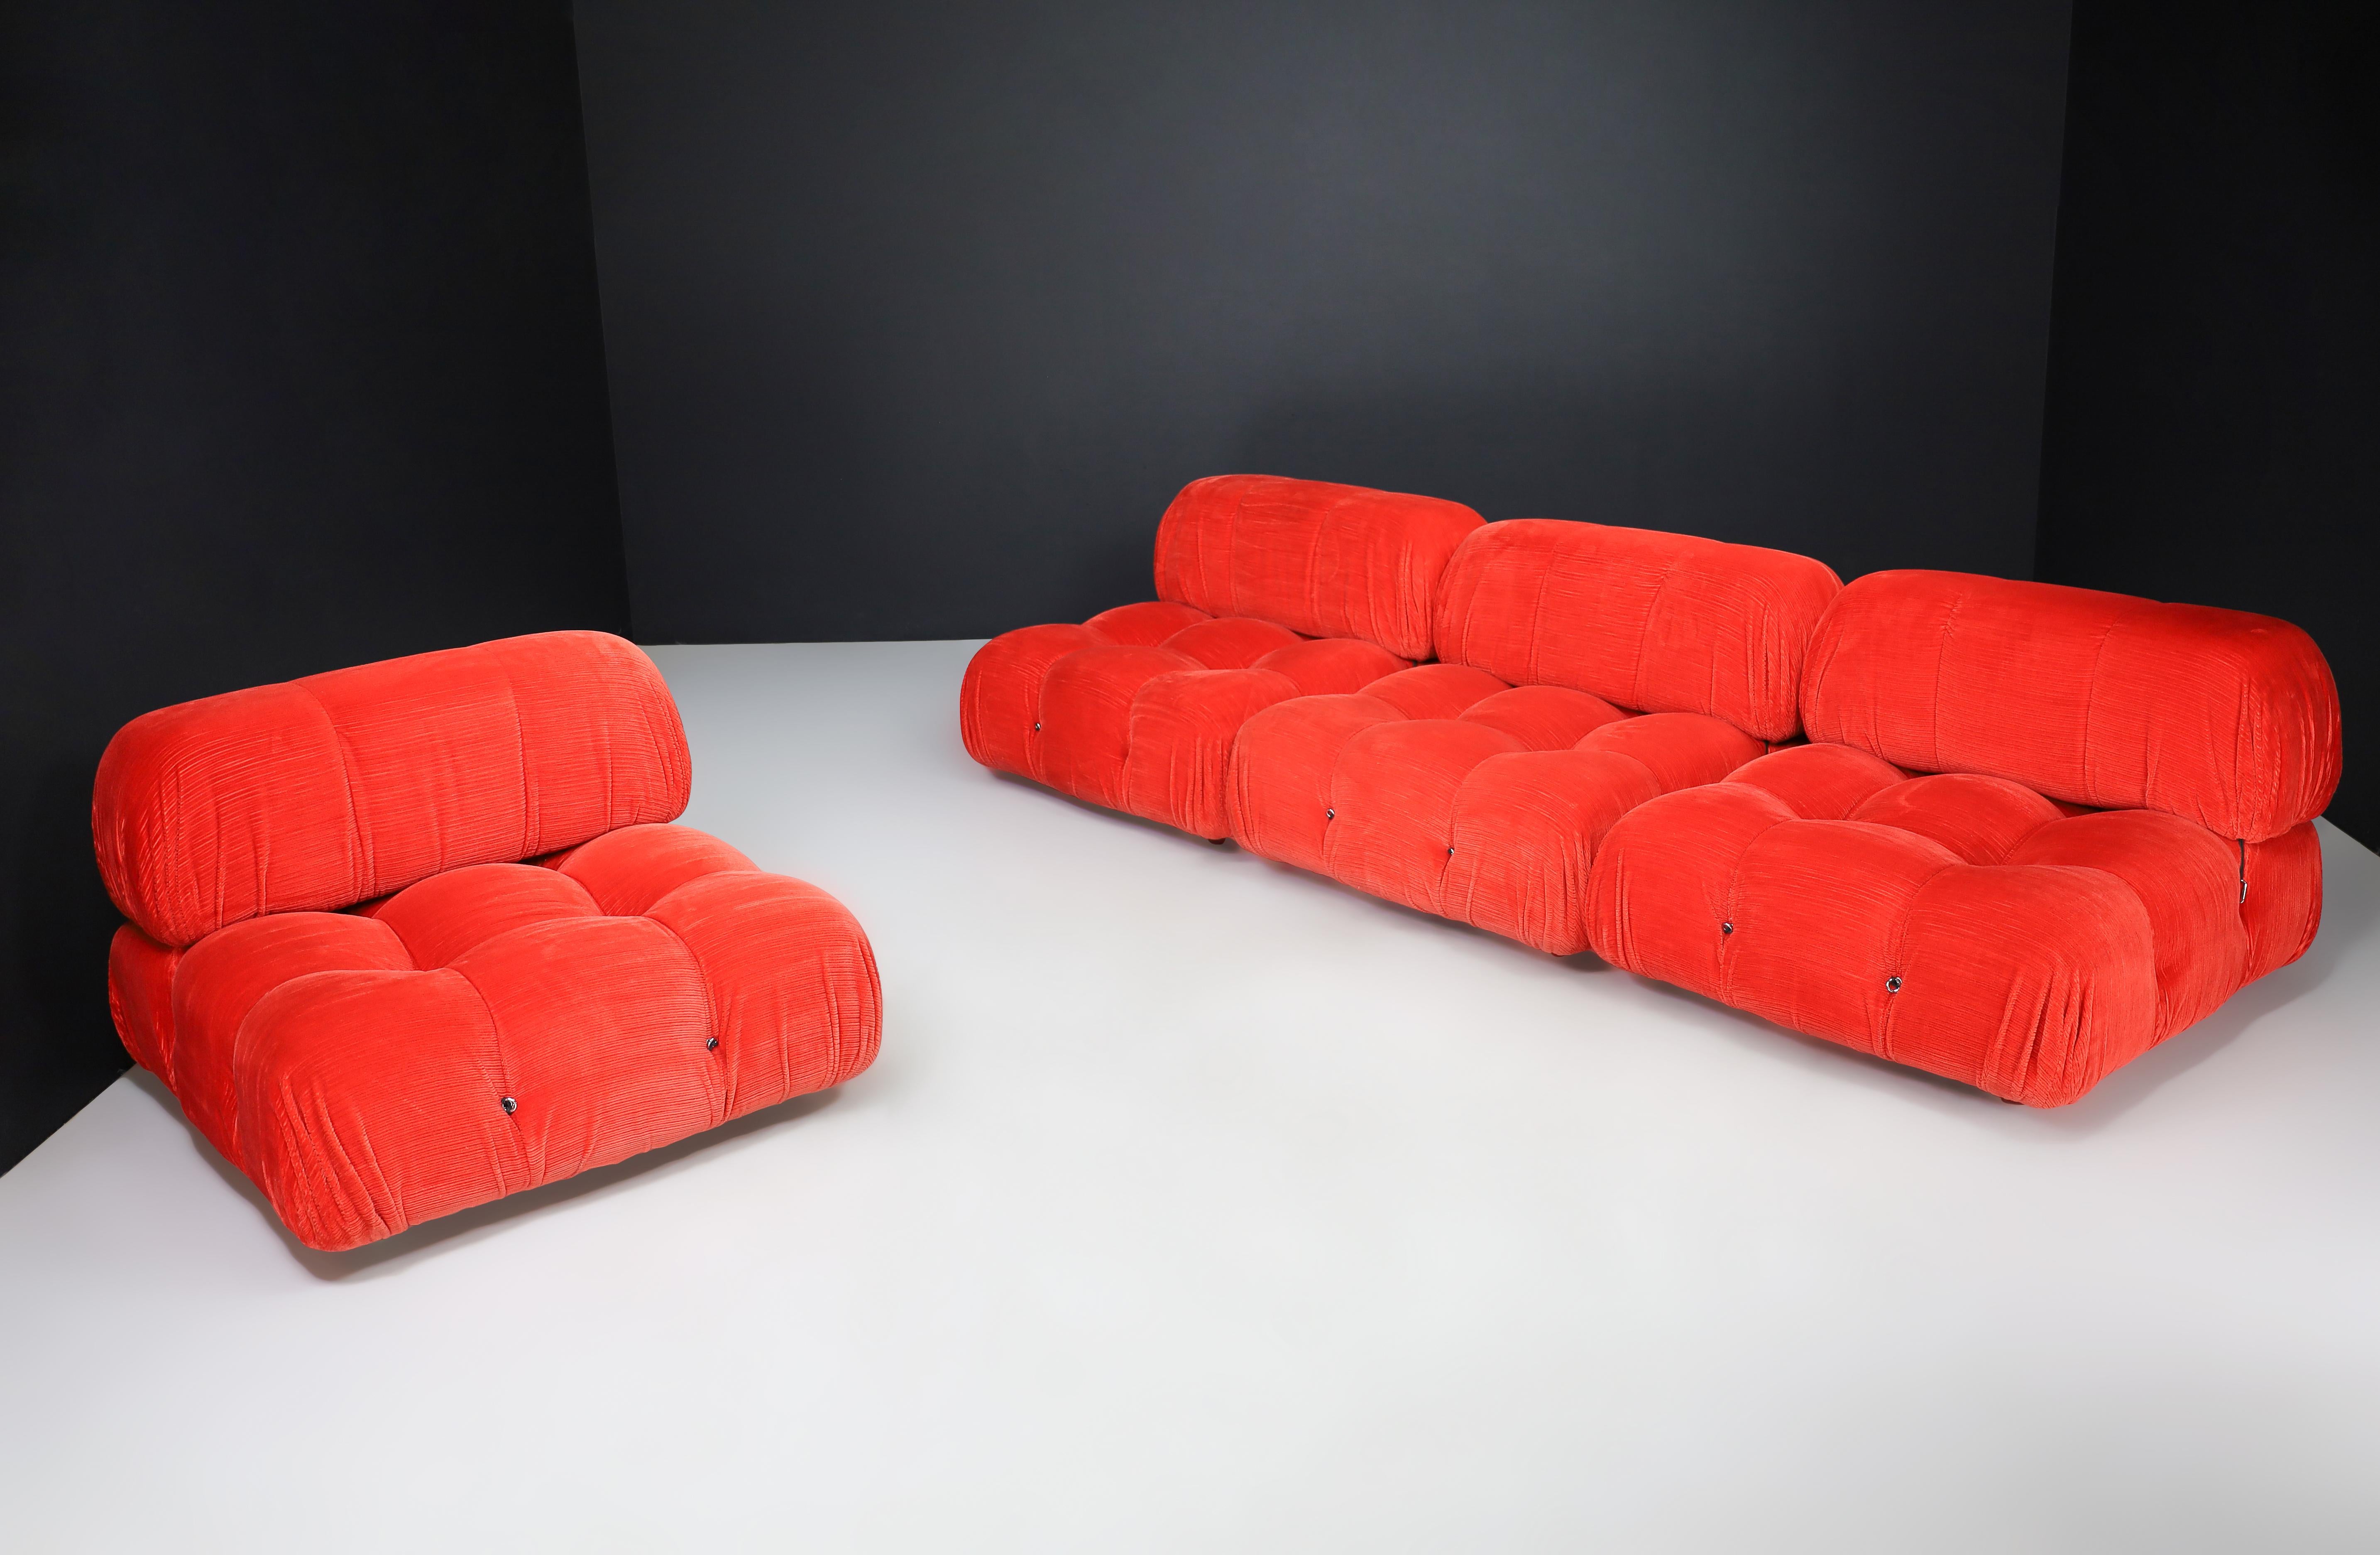 Mario Bellini für B&B Italia 'Camaleonda' Modulares Sofa mit rotem Kordsamtbezug Italien 1973

Mario Bellini entwarf dieses ikonische Sofa 